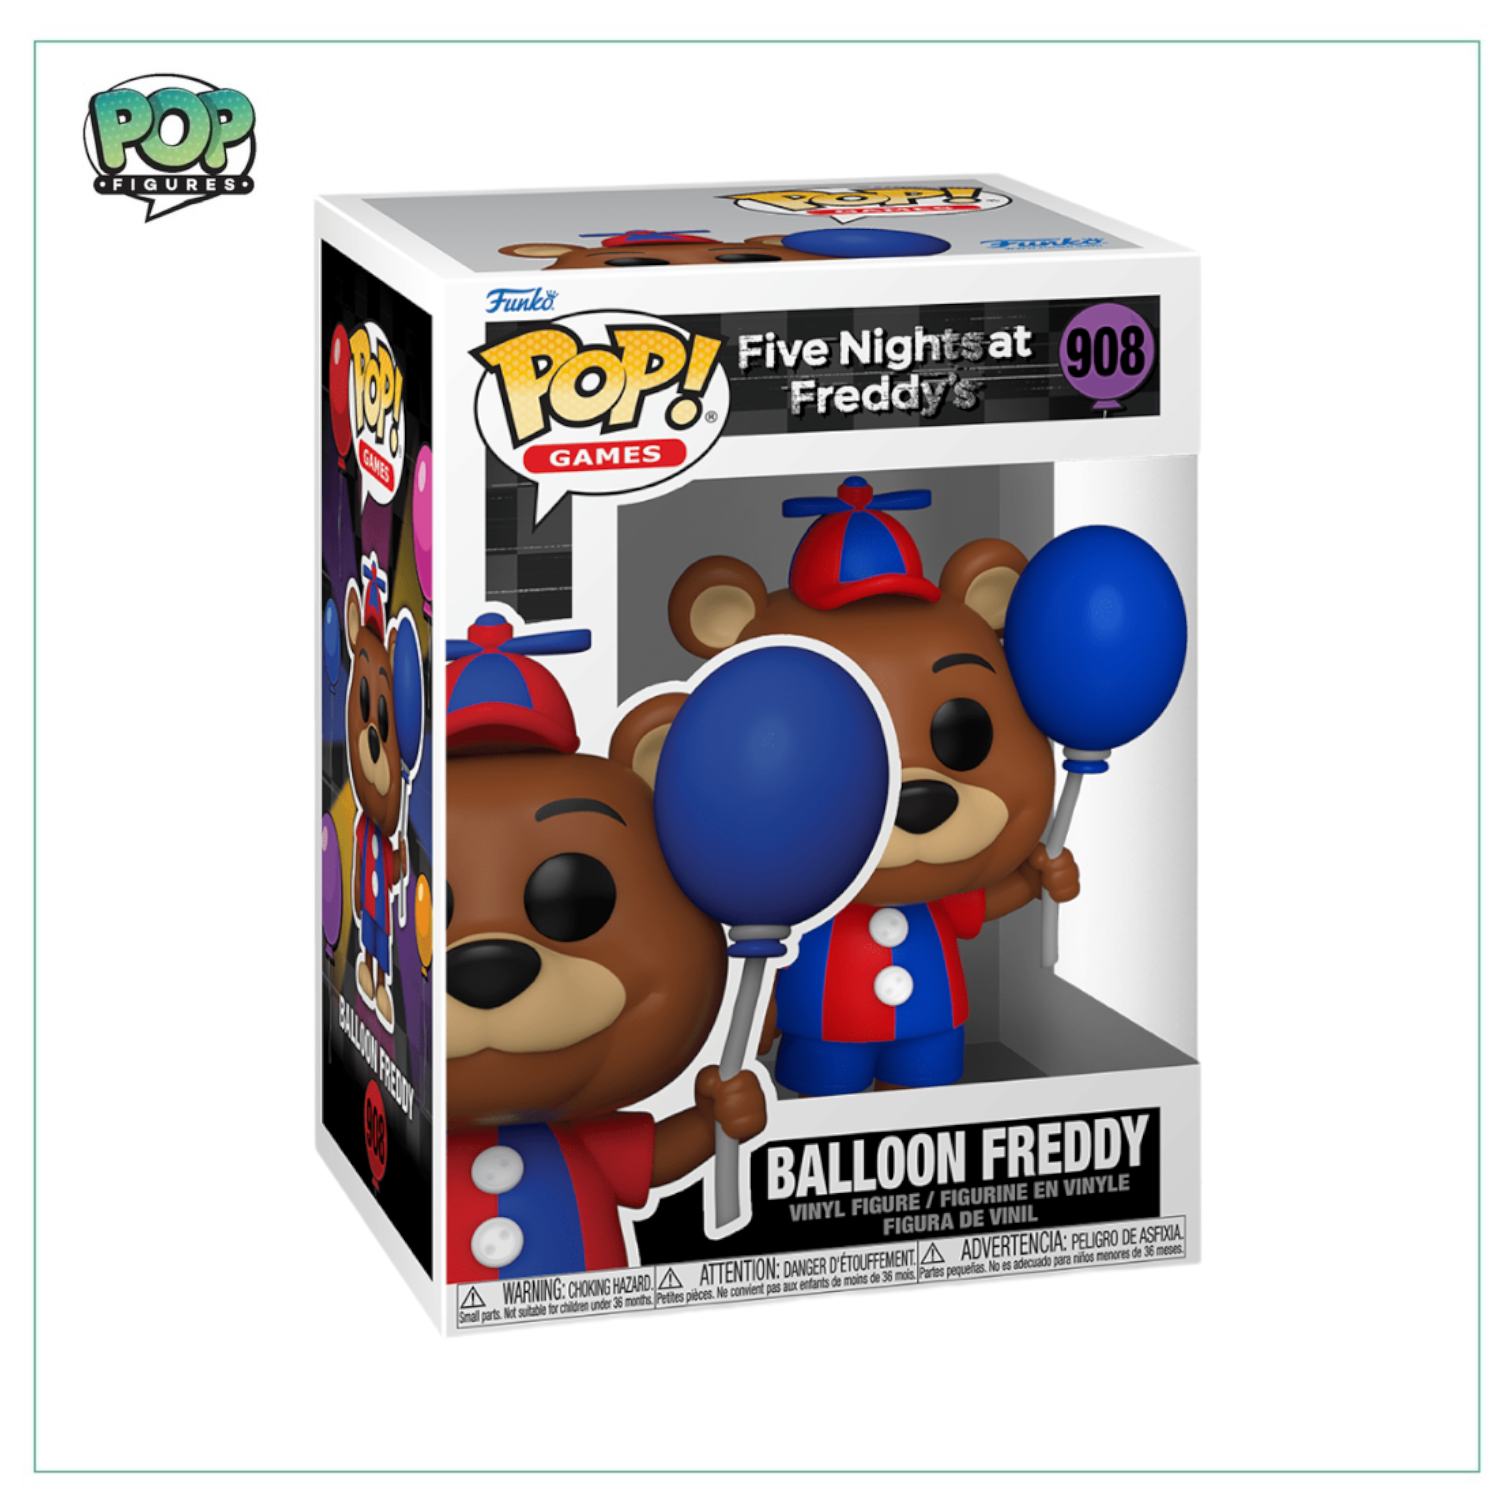 Balloon Freddy #908 Funko Pop! Five Night’s at Freddy’s